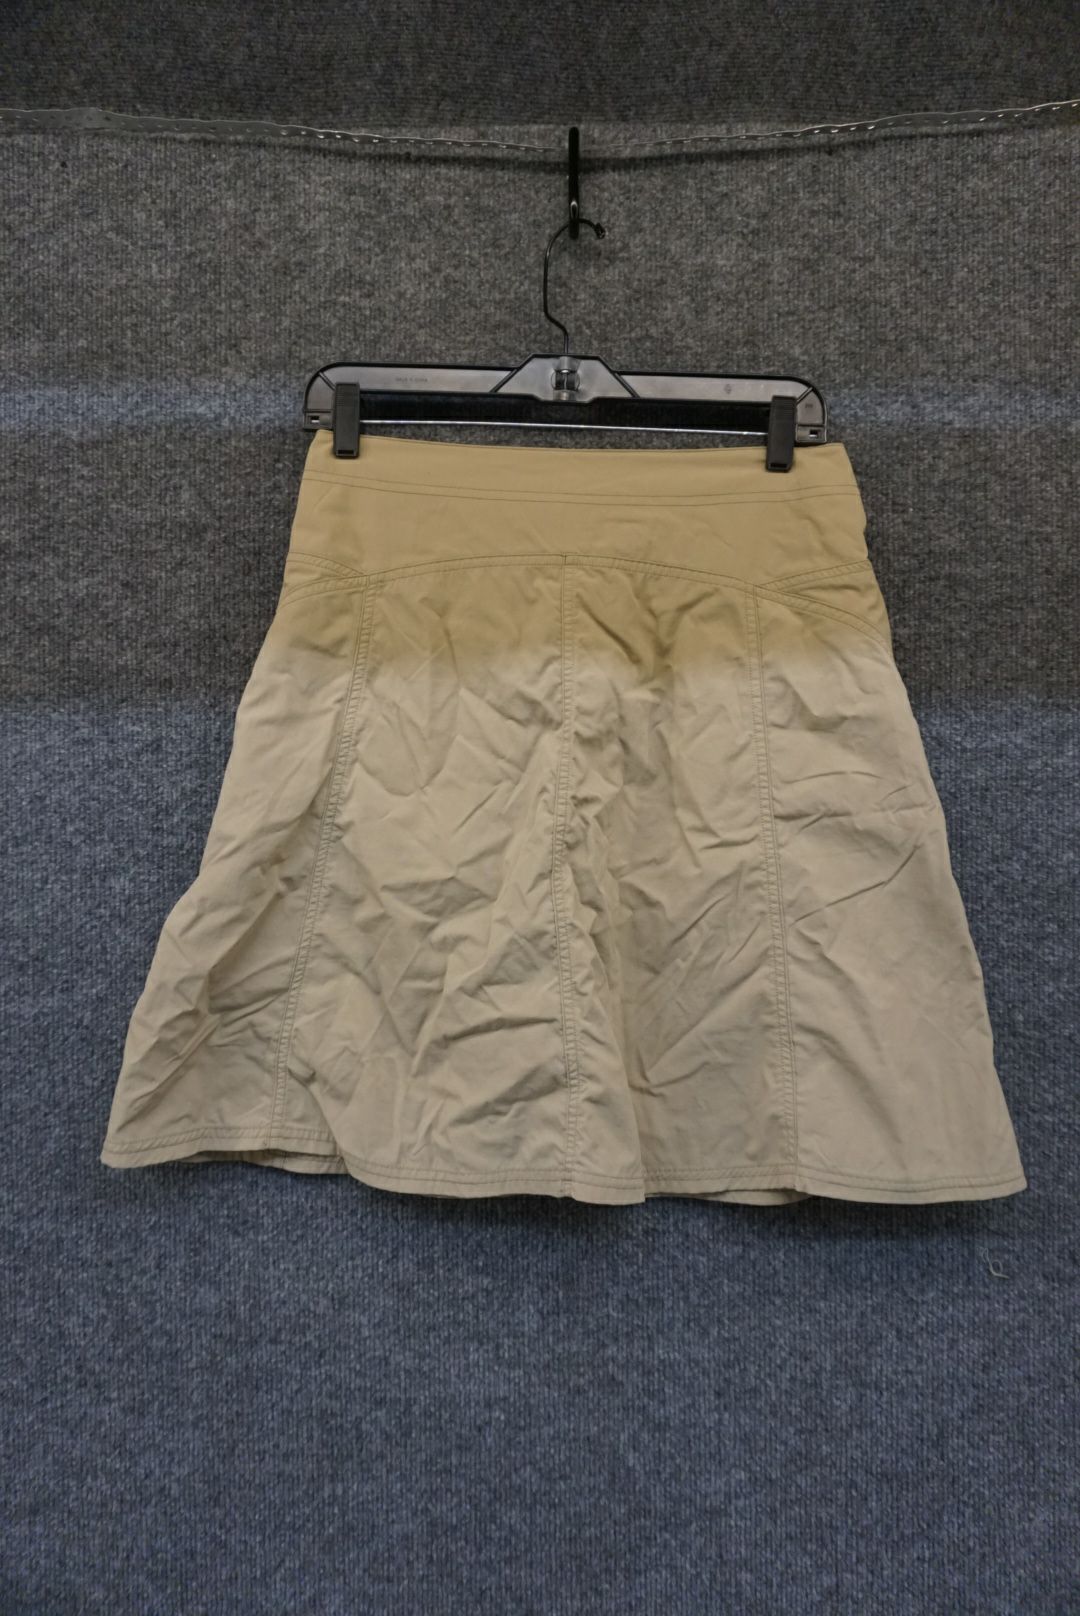 Mountain Hardwear Tan Size 34 Women's Skirt